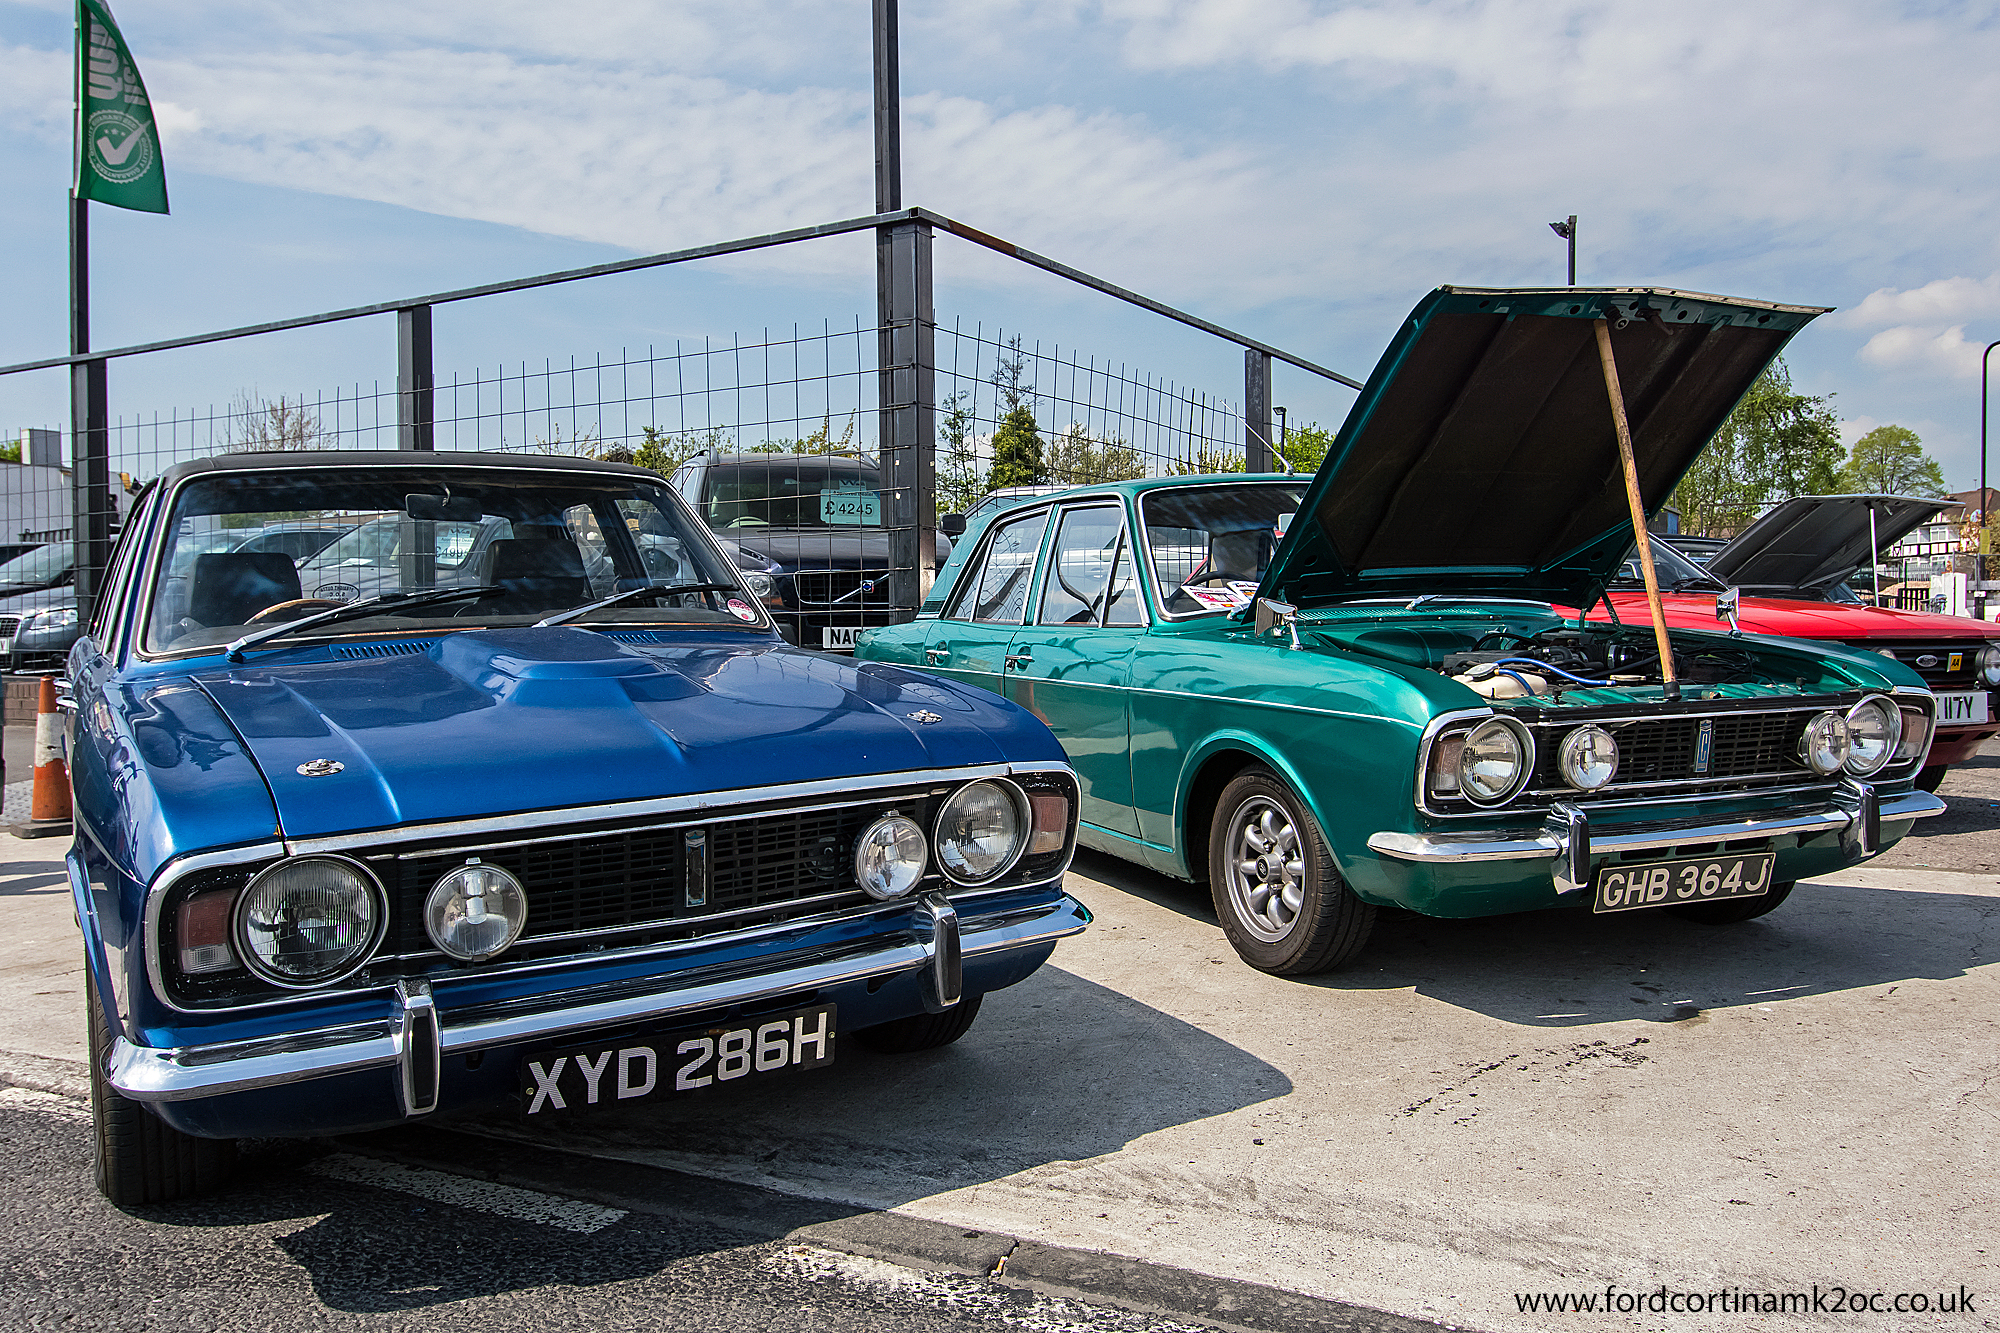 Cortinas at the Ace - Ford Cortina Mk2 Owners Club | Ford Cortina Mk2 ...